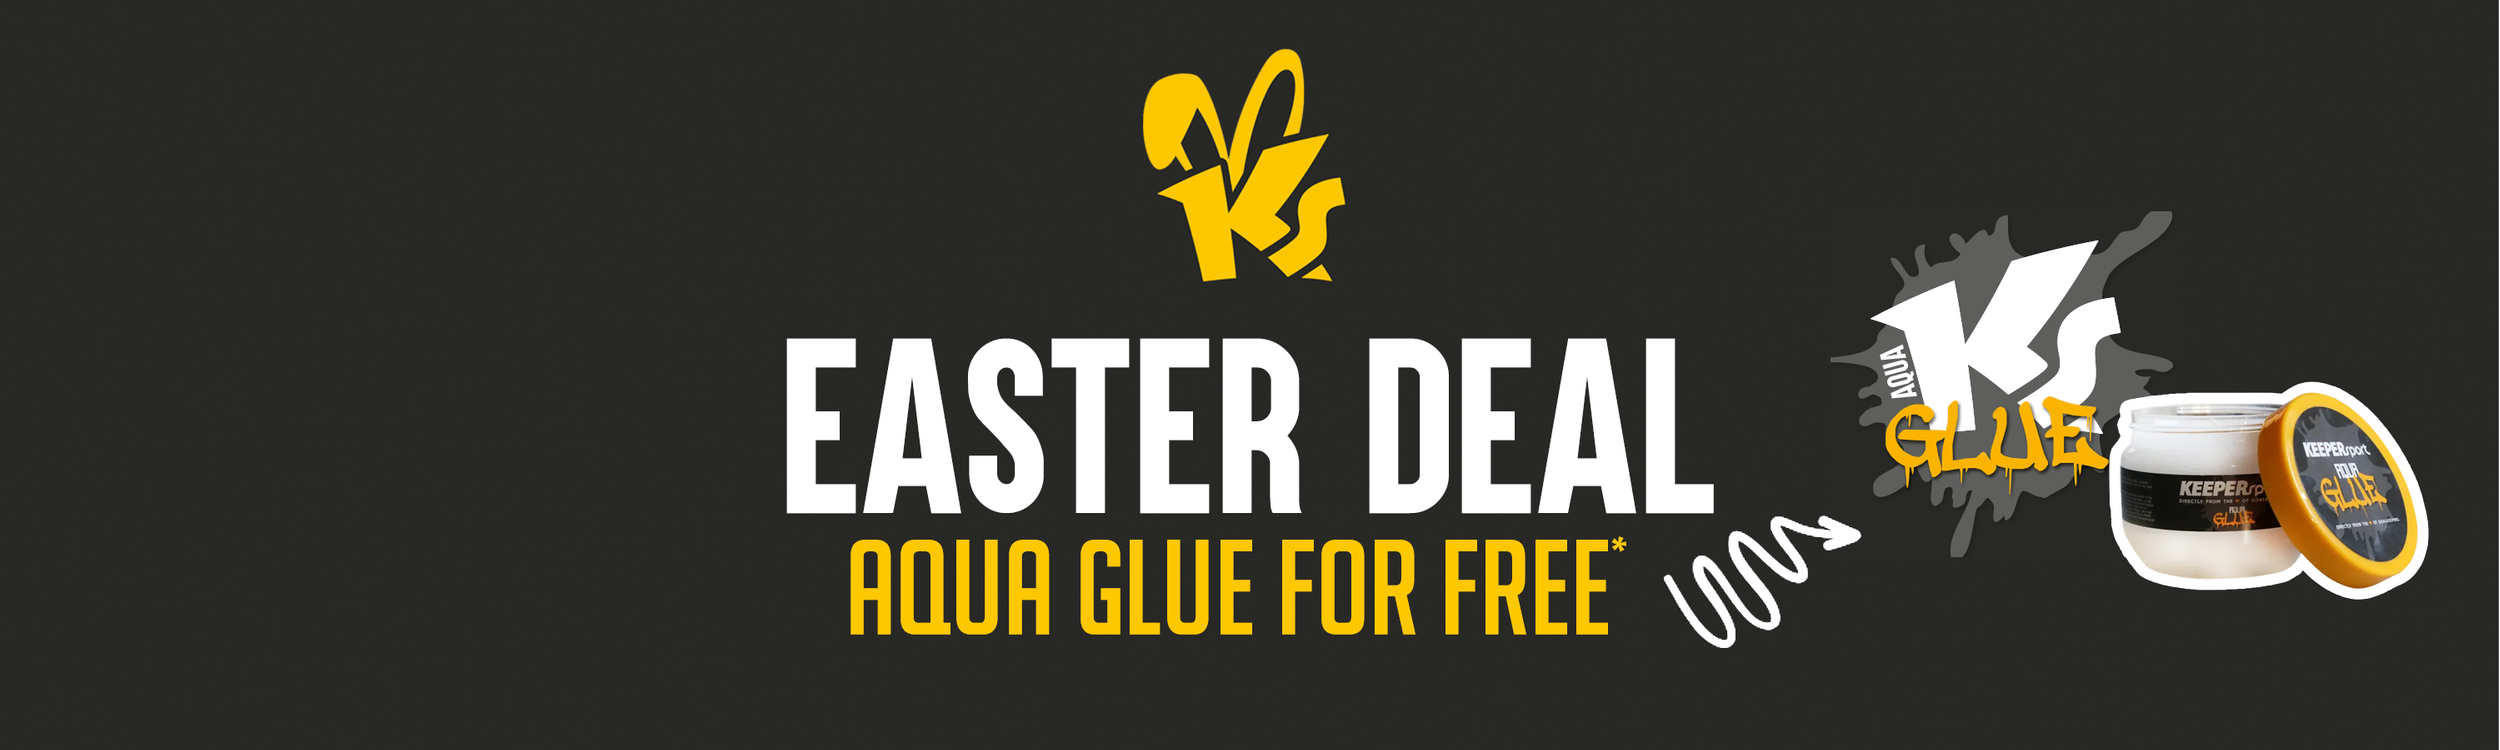 FREE KEEPERsport Aqua Glue Easter deal 